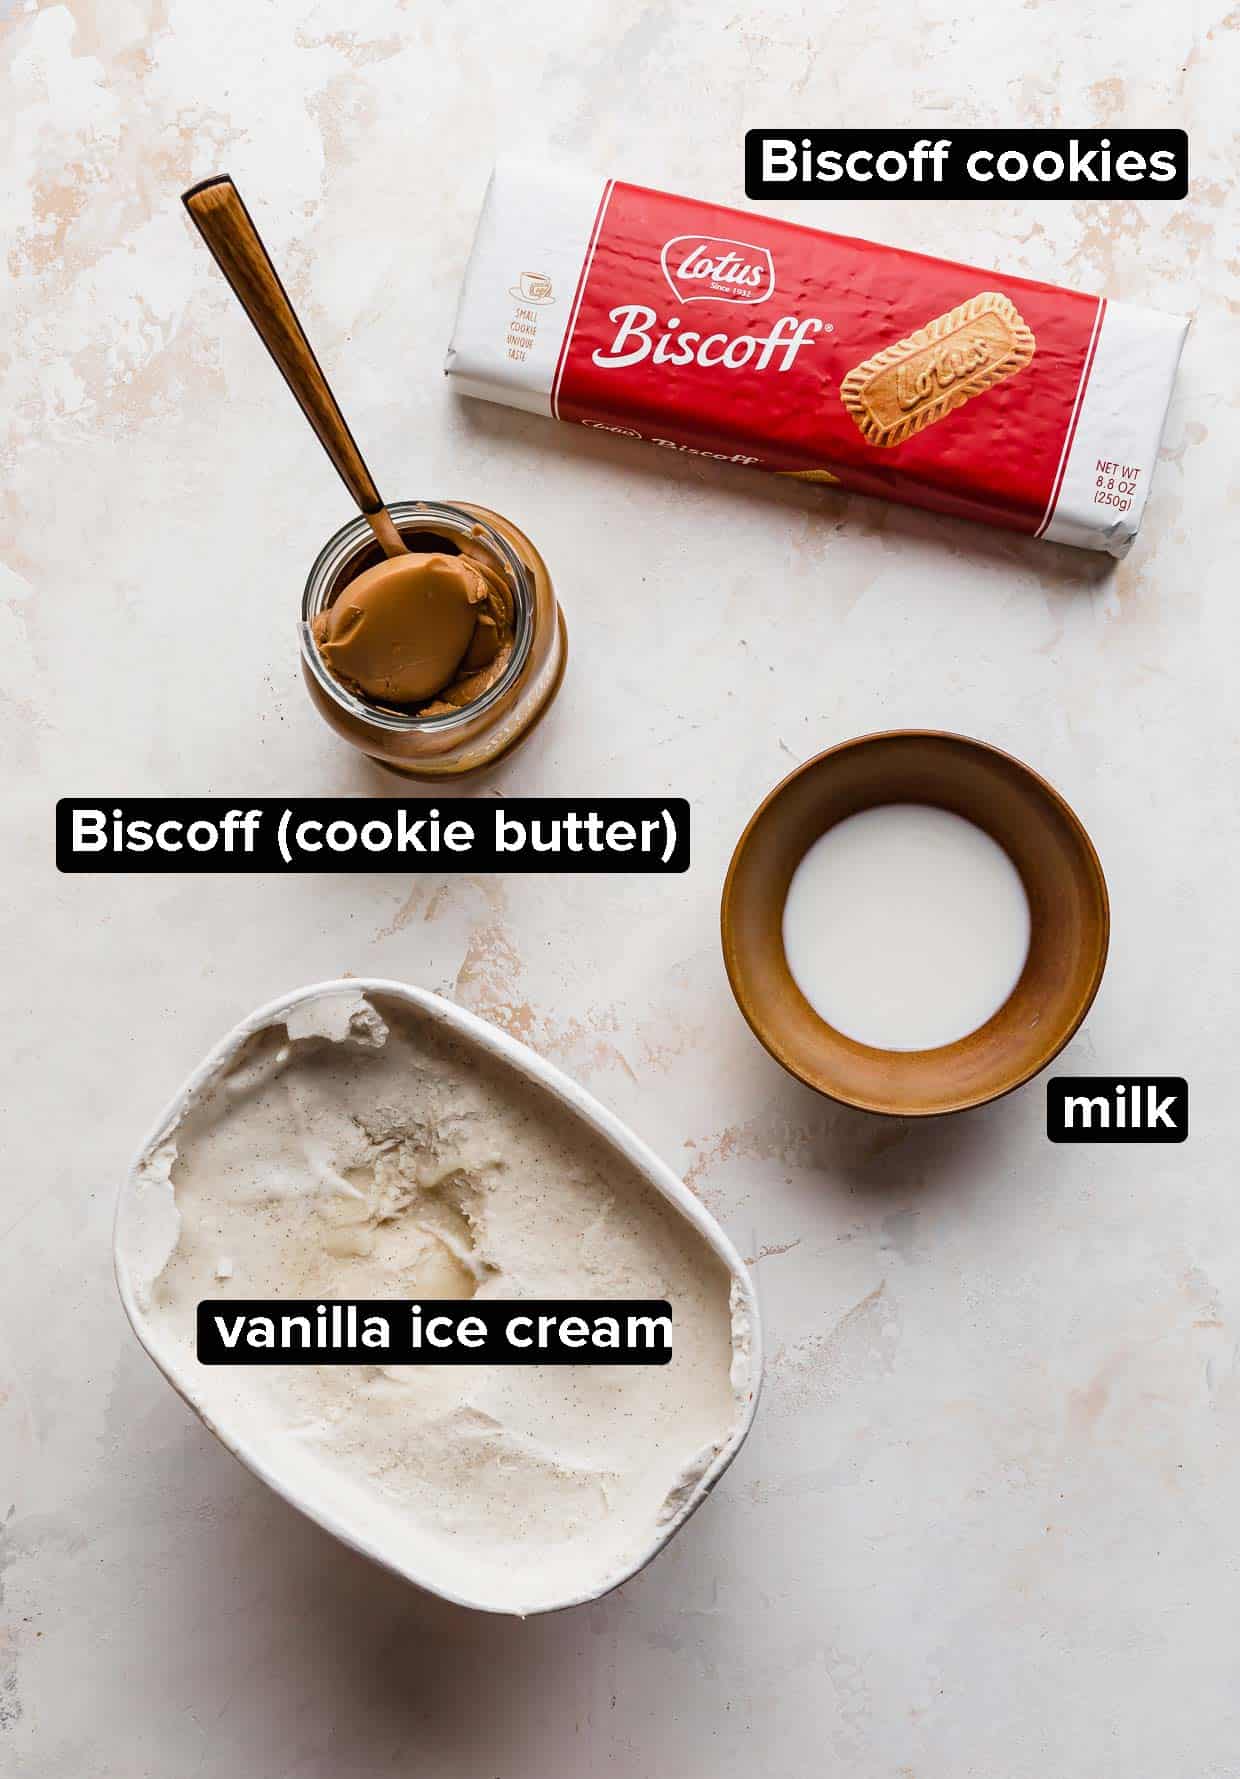 Biscoff Milkshake ingredients on a white background: vanilla ice cream, cookie butter, Biscoff (lotus) cookies, and milk.